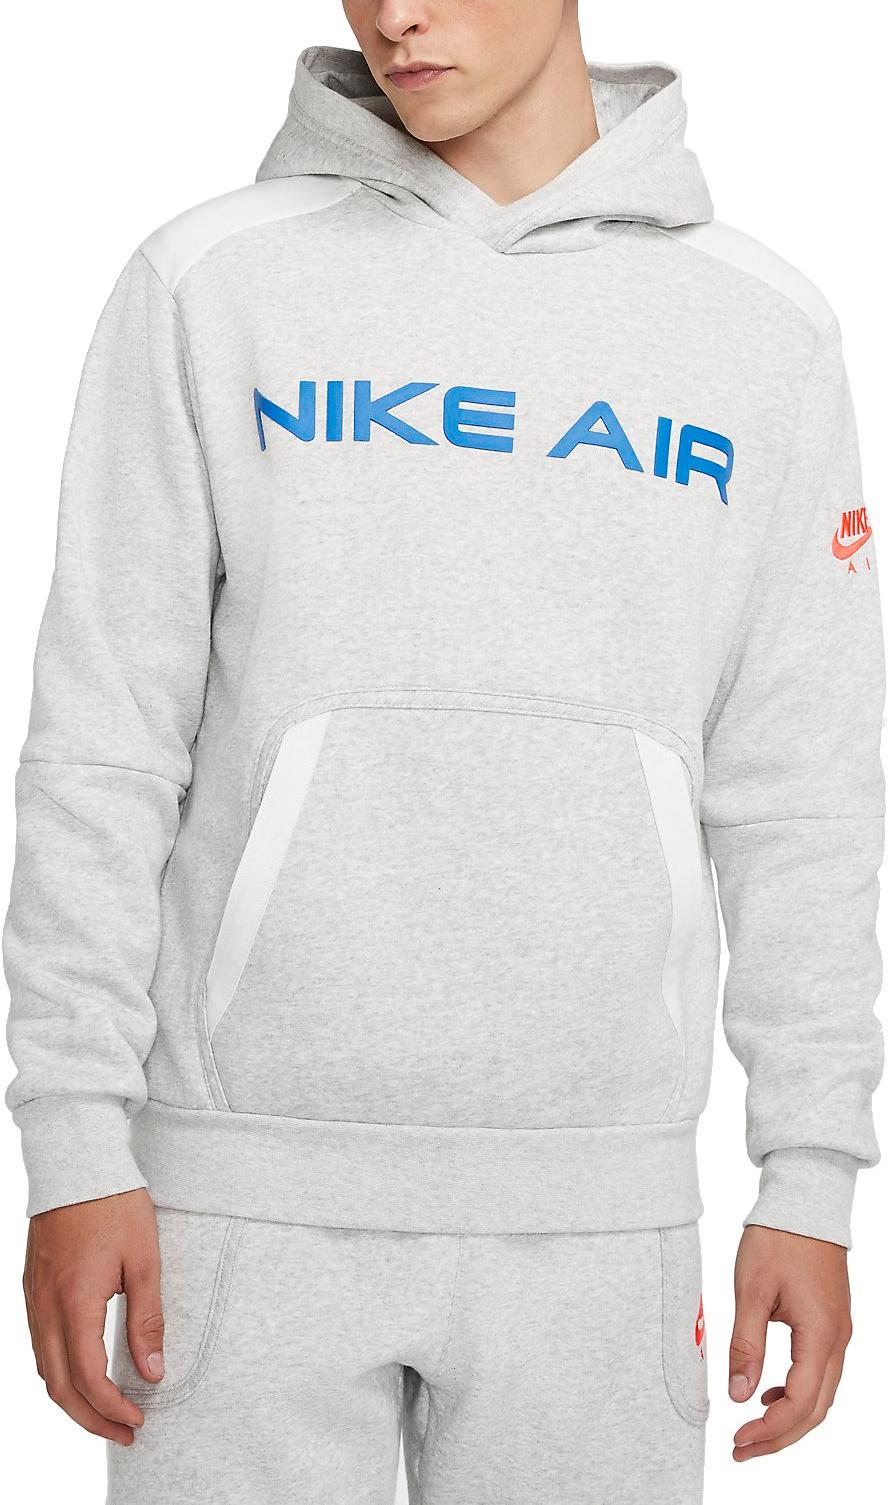 Pánská mikina s kapucí Nike Air Pullover Fleece